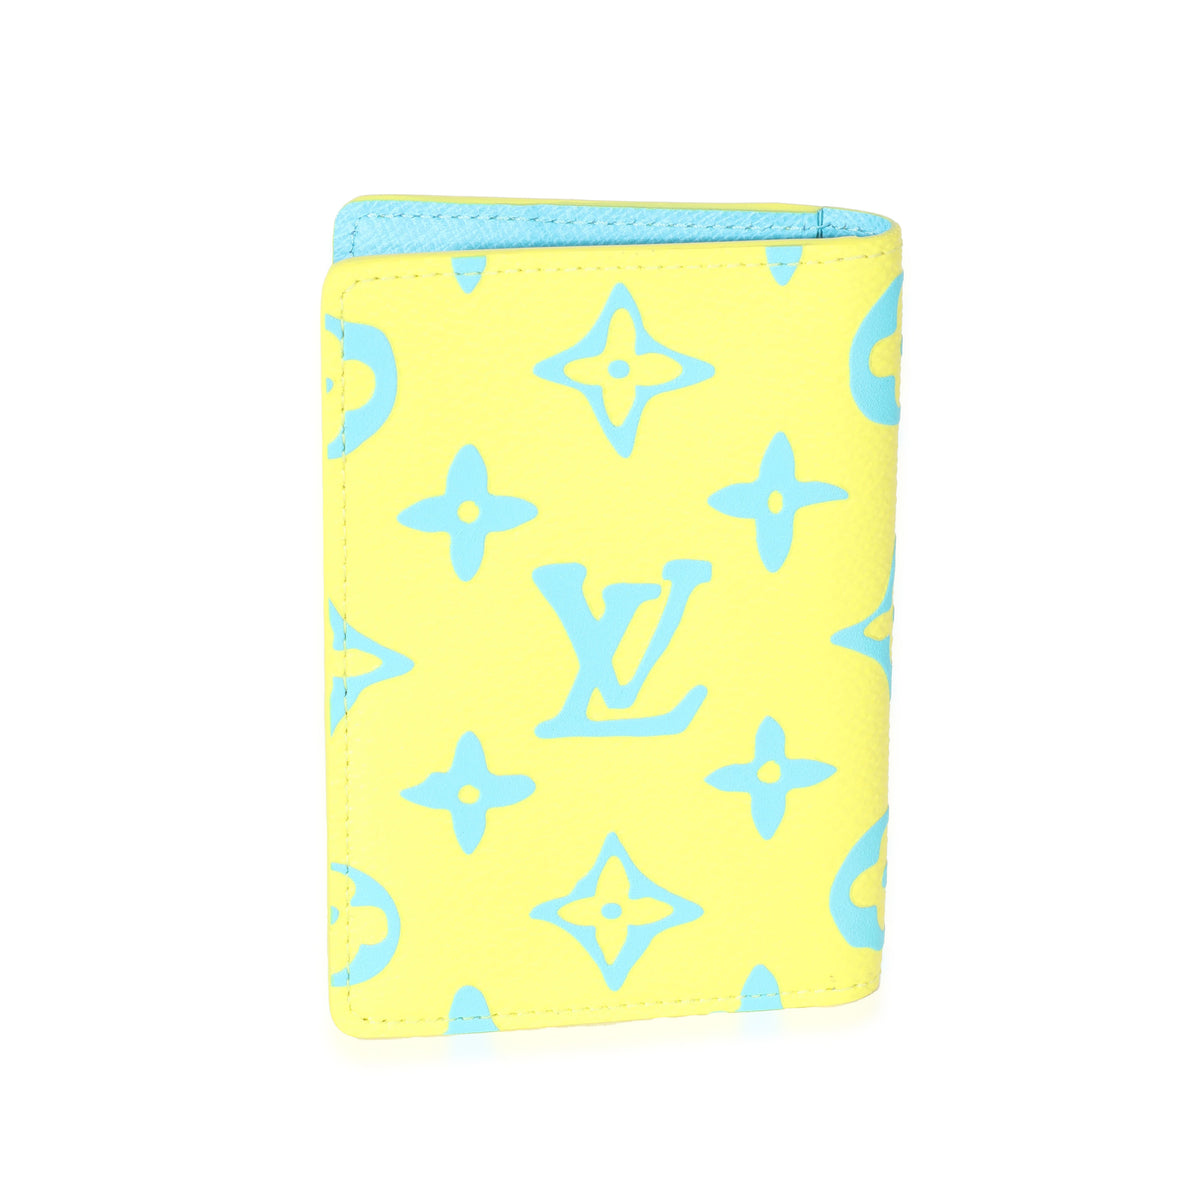 Louis Vuitton Pocket Organizer Monogram Neon Yellow